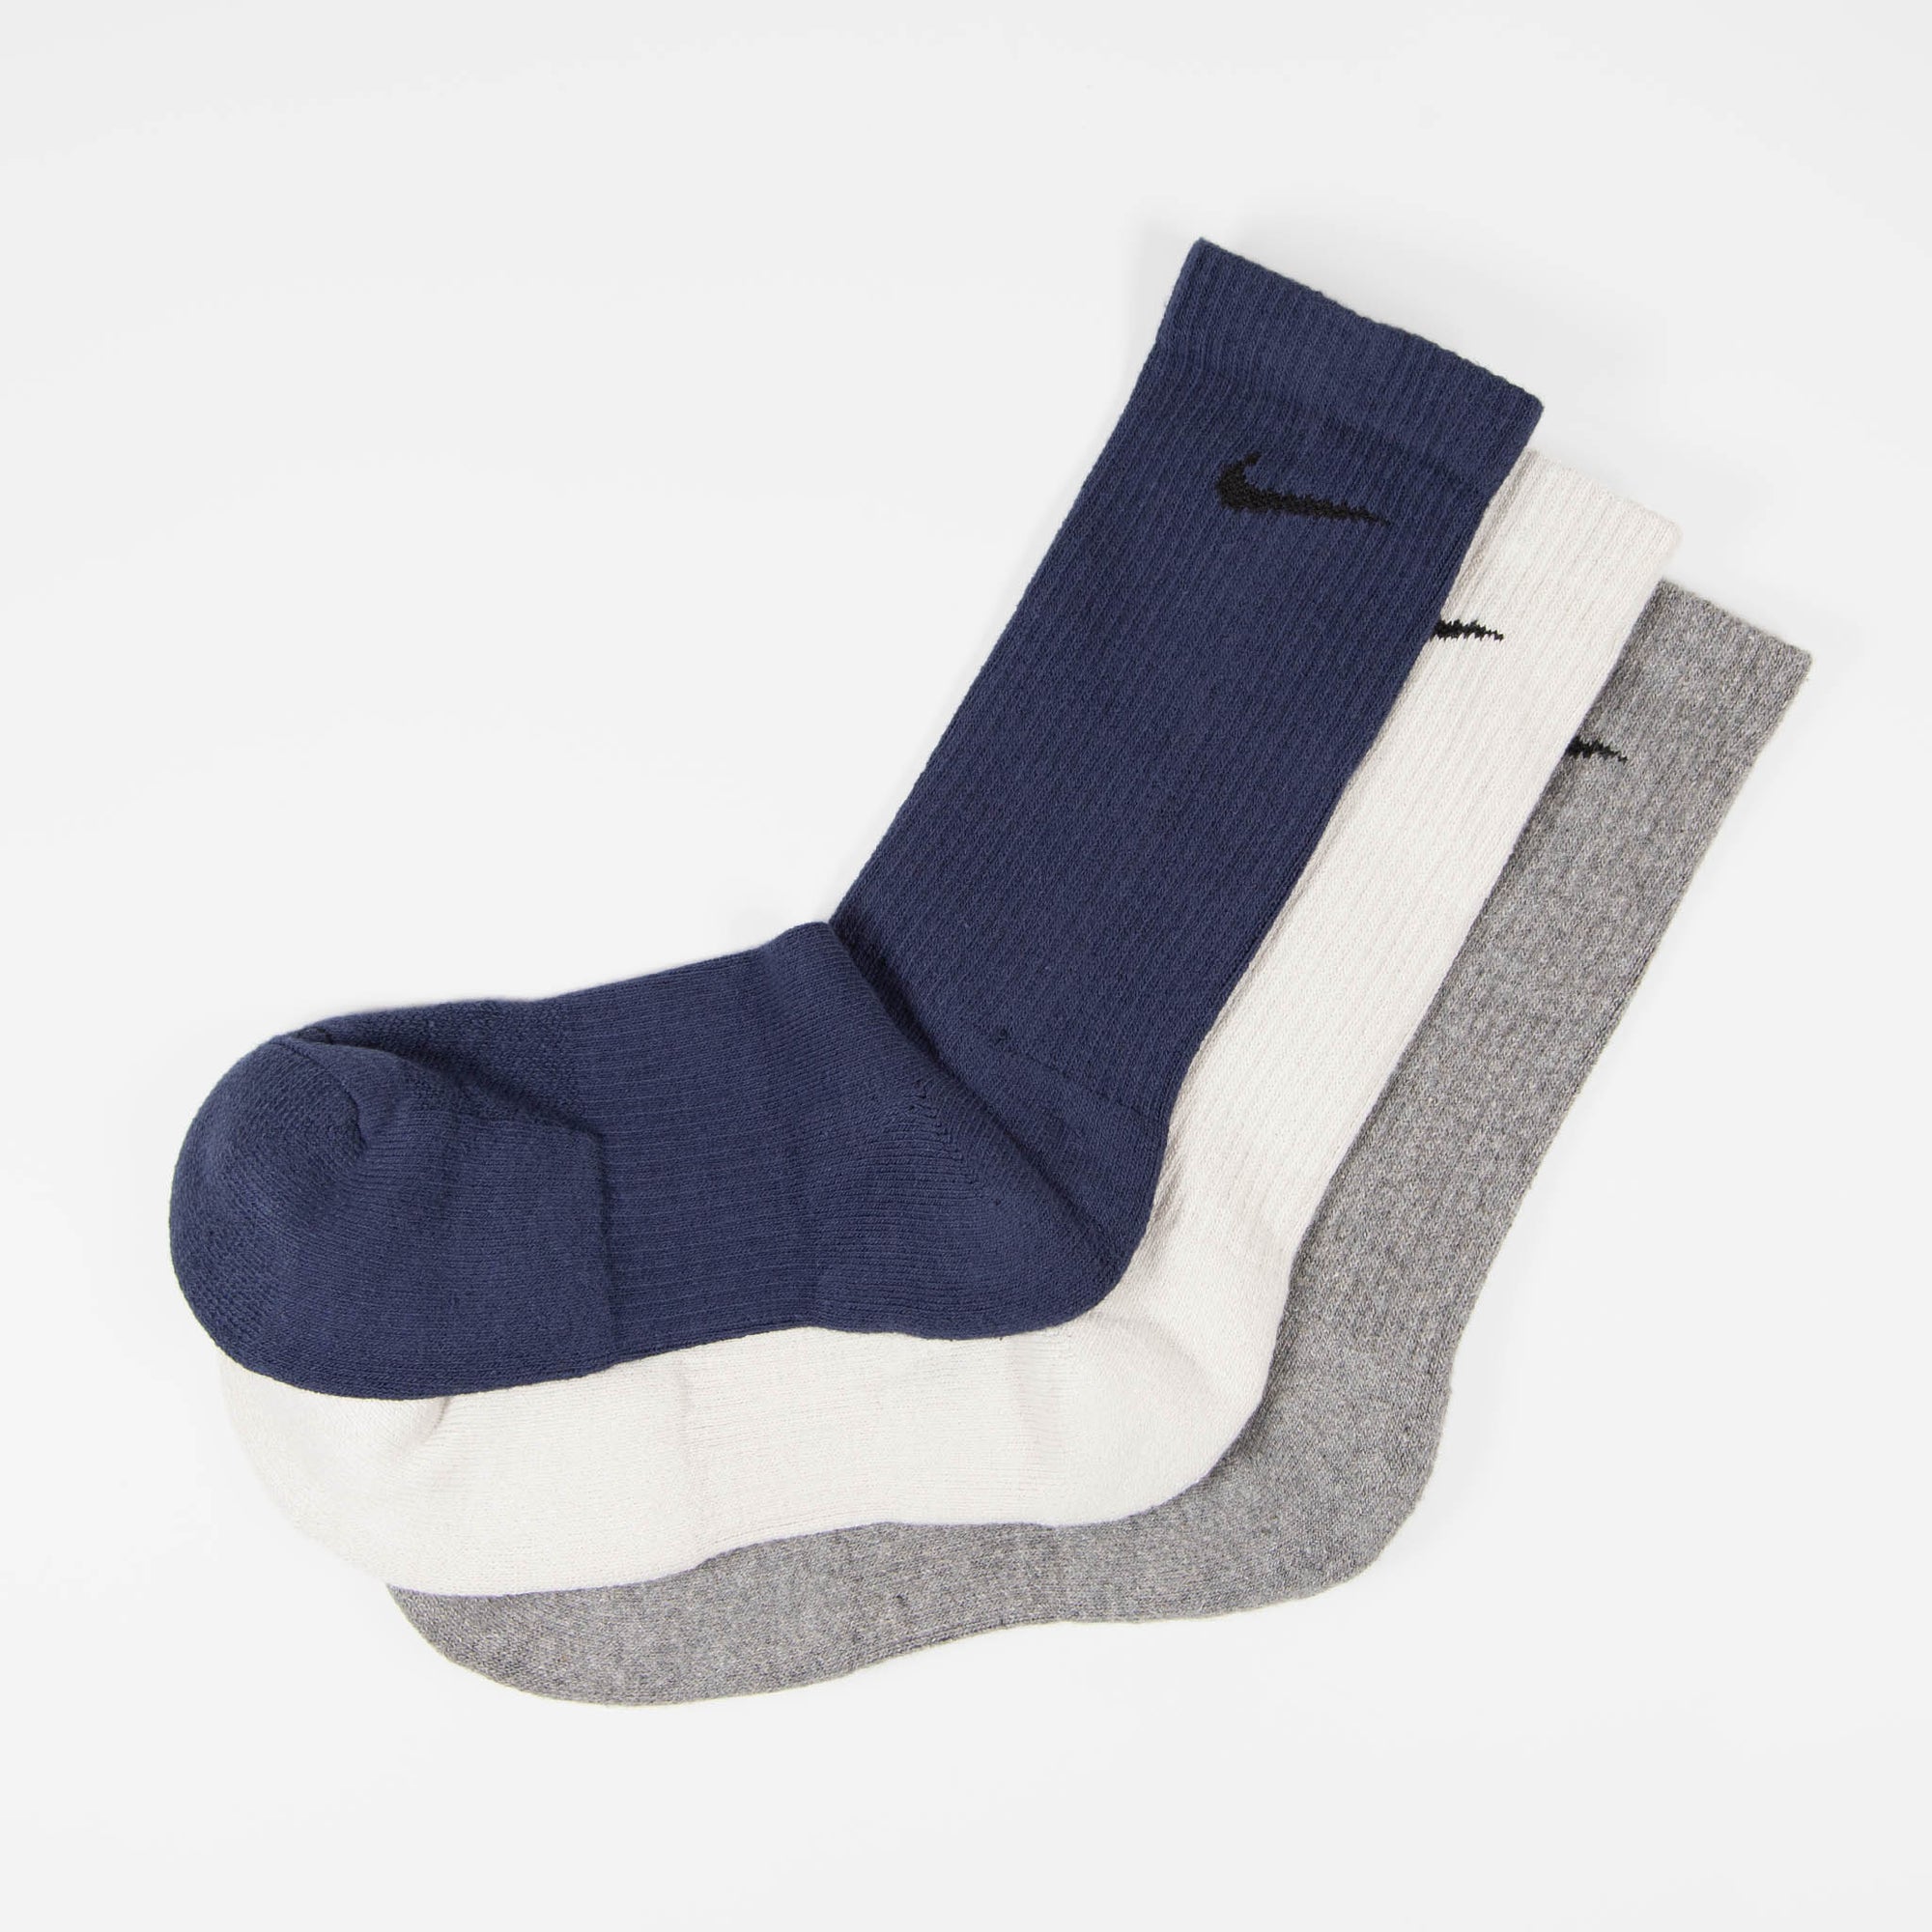 Nike SB - Everyday Plus Cushioned Socks (3 Pack) - White / Grey / Navy